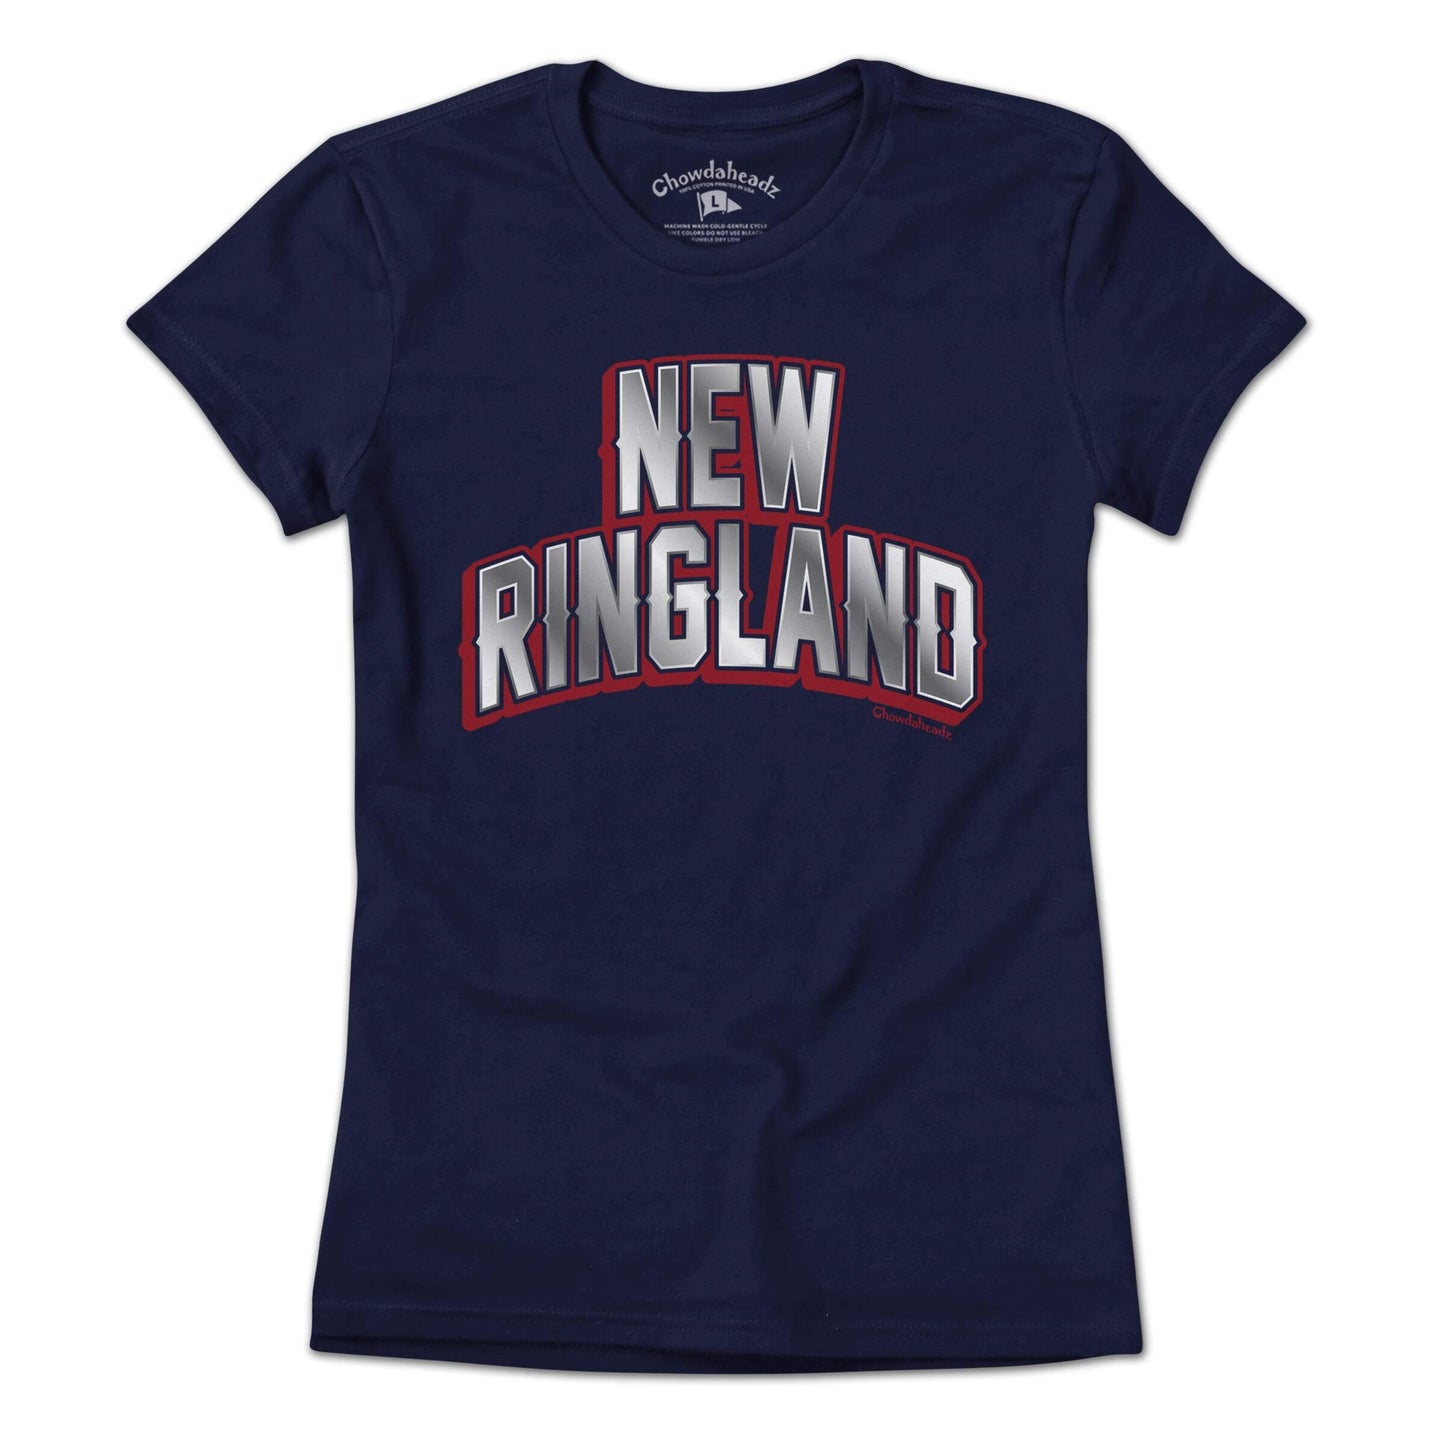 New Ringland T-Shirt - Chowdaheadz